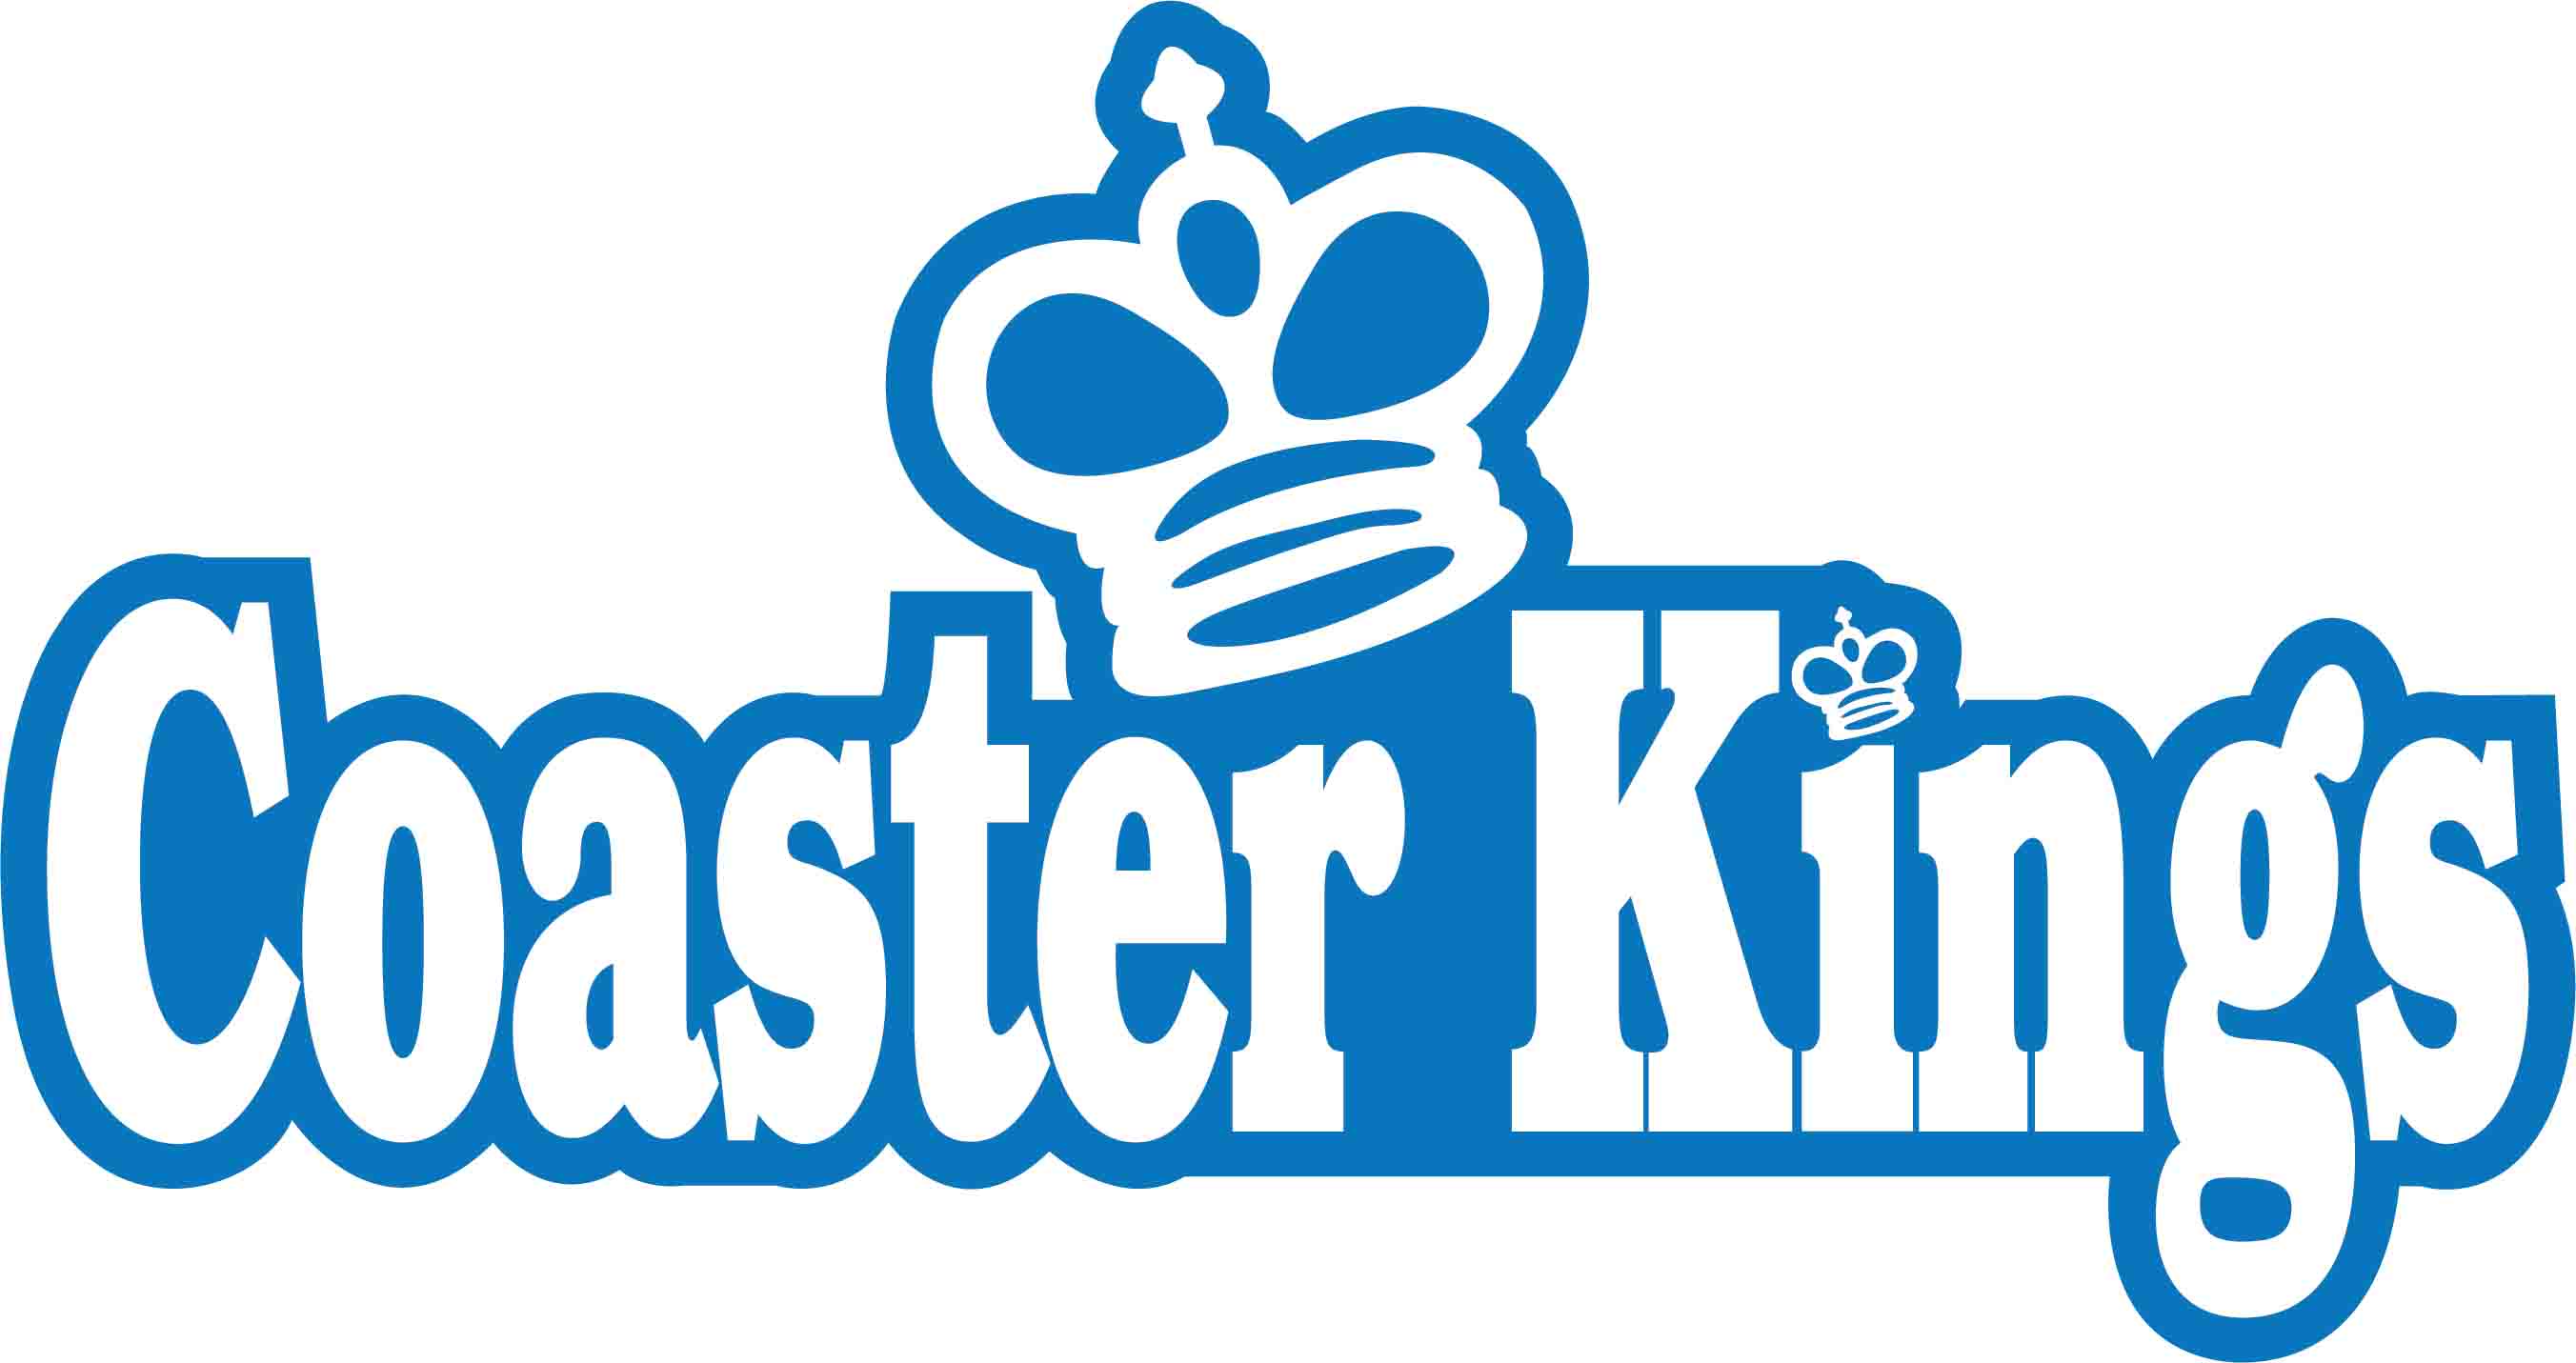 Coaster Logo - Coaster Kings | Custom Drink Coasters | Beer Coasters | Printer/Supplier